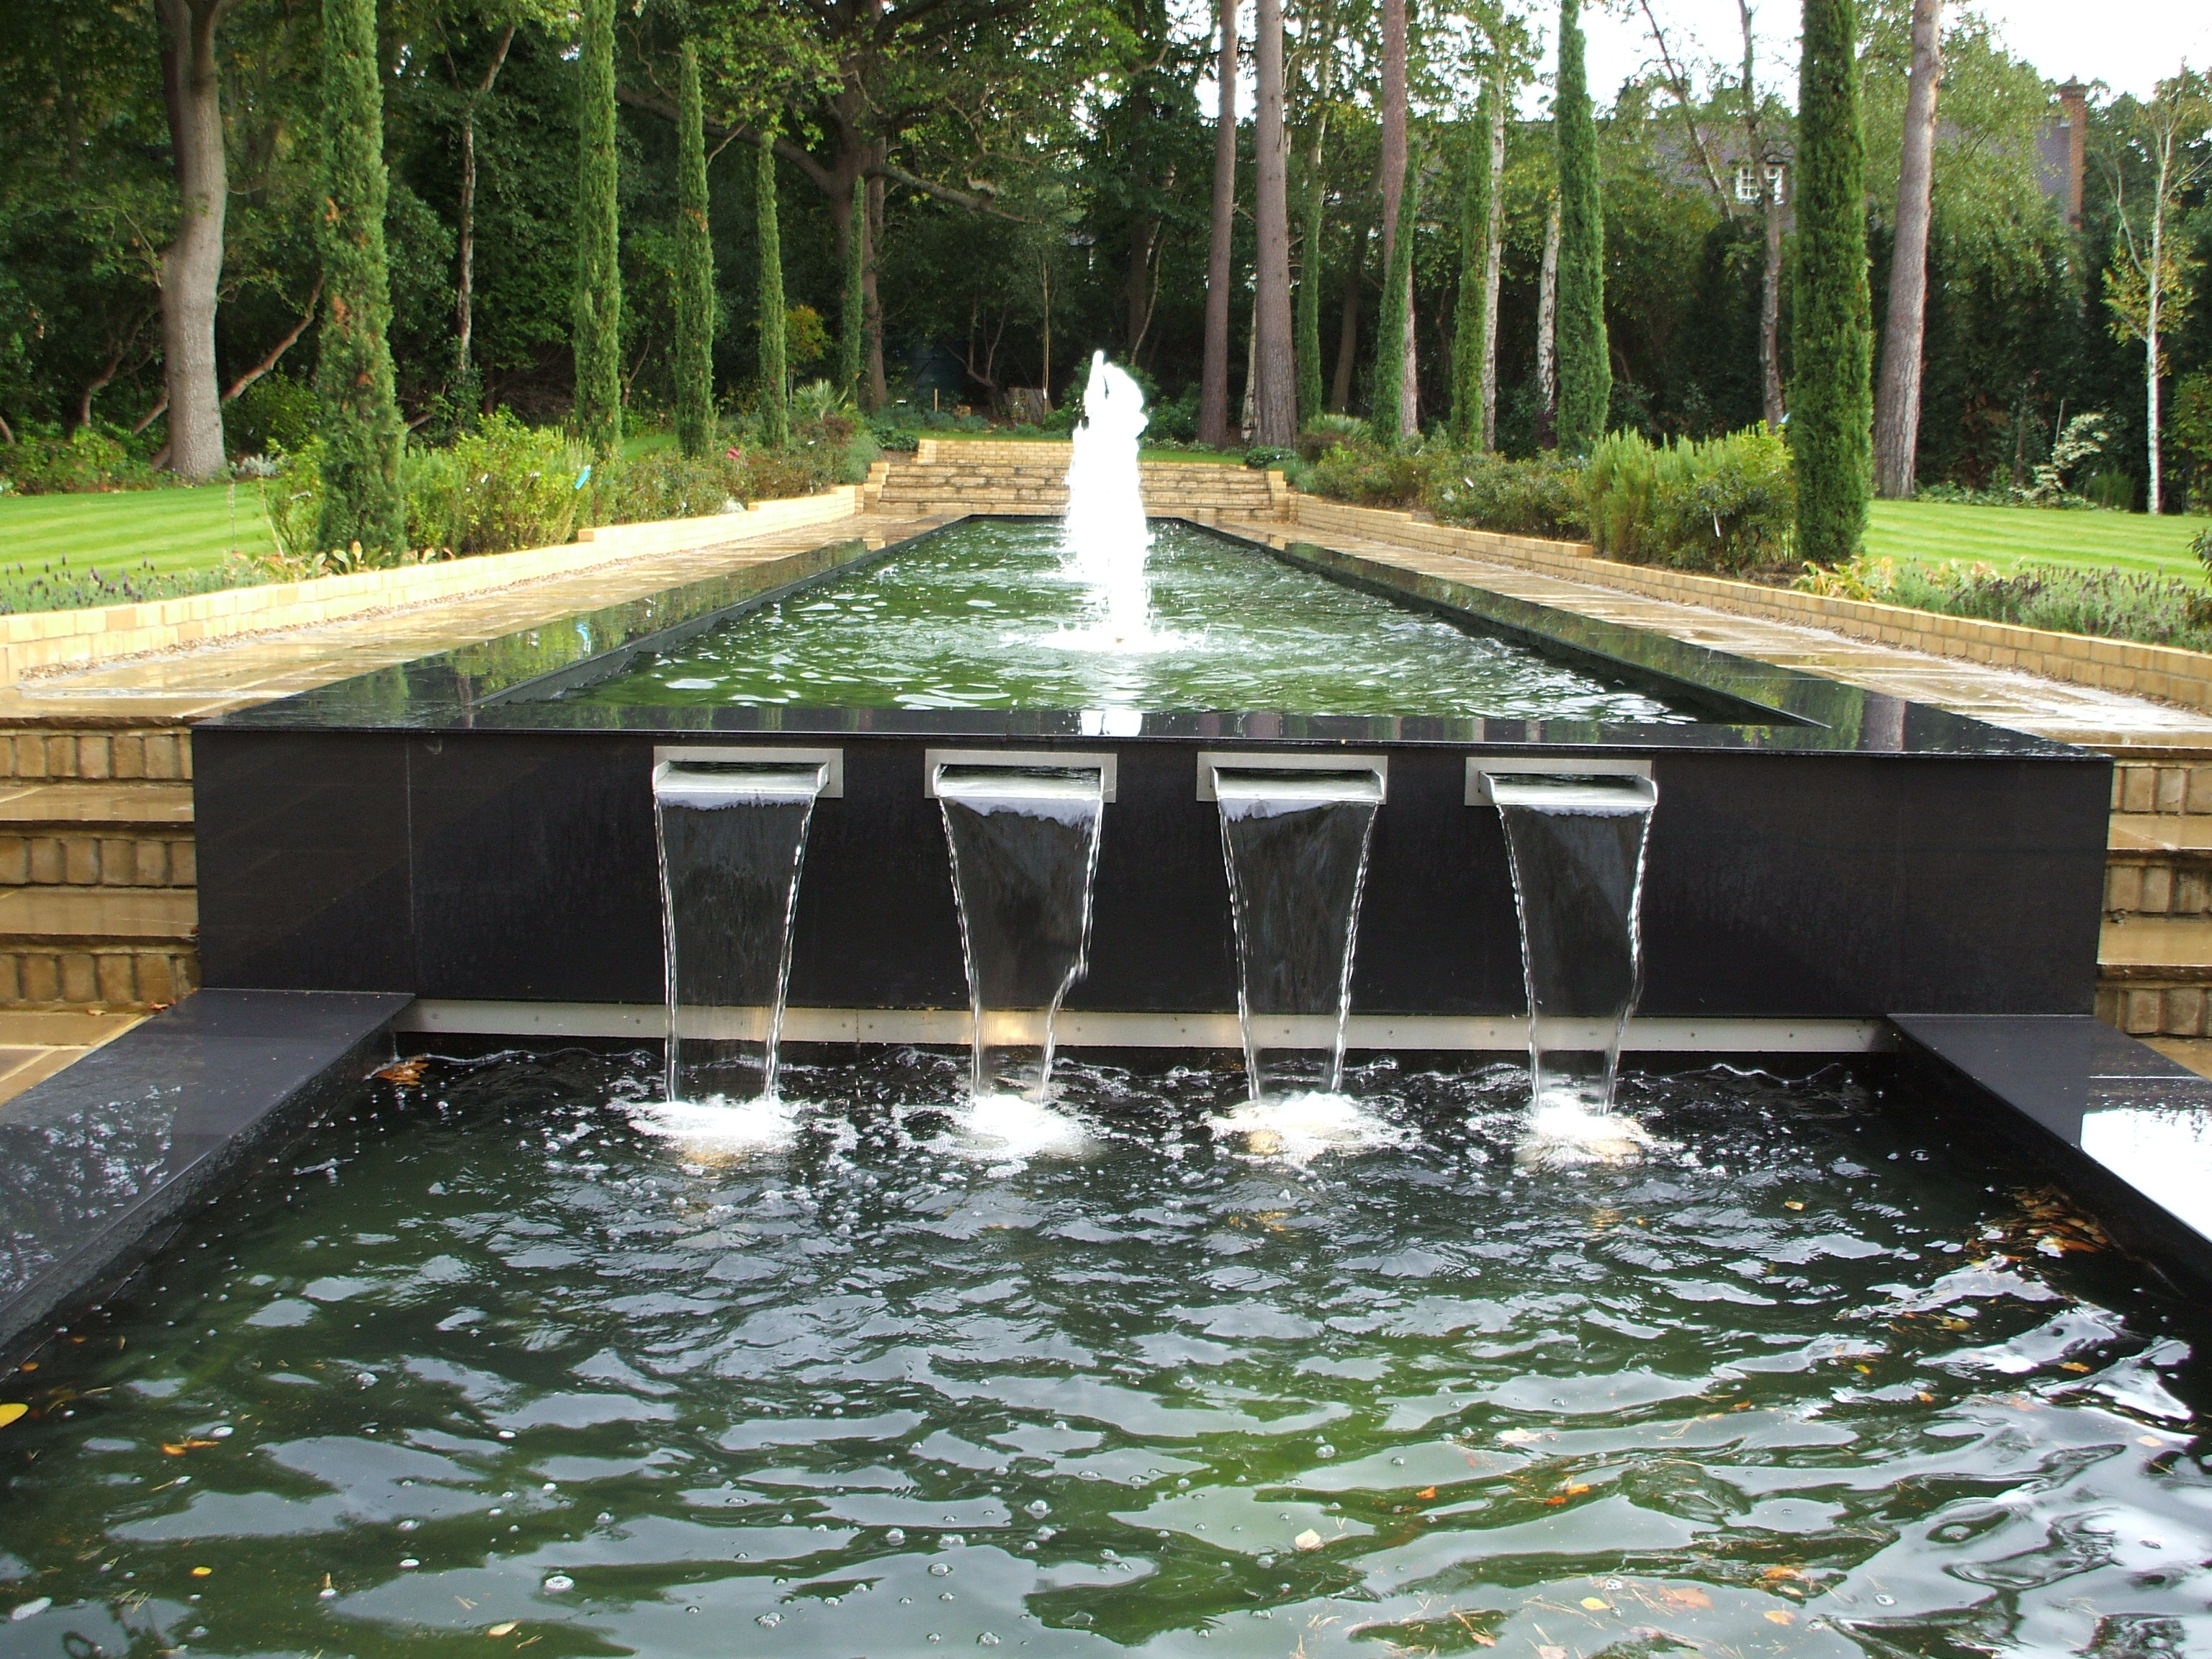 Aquajoy Water Gardens Ltd